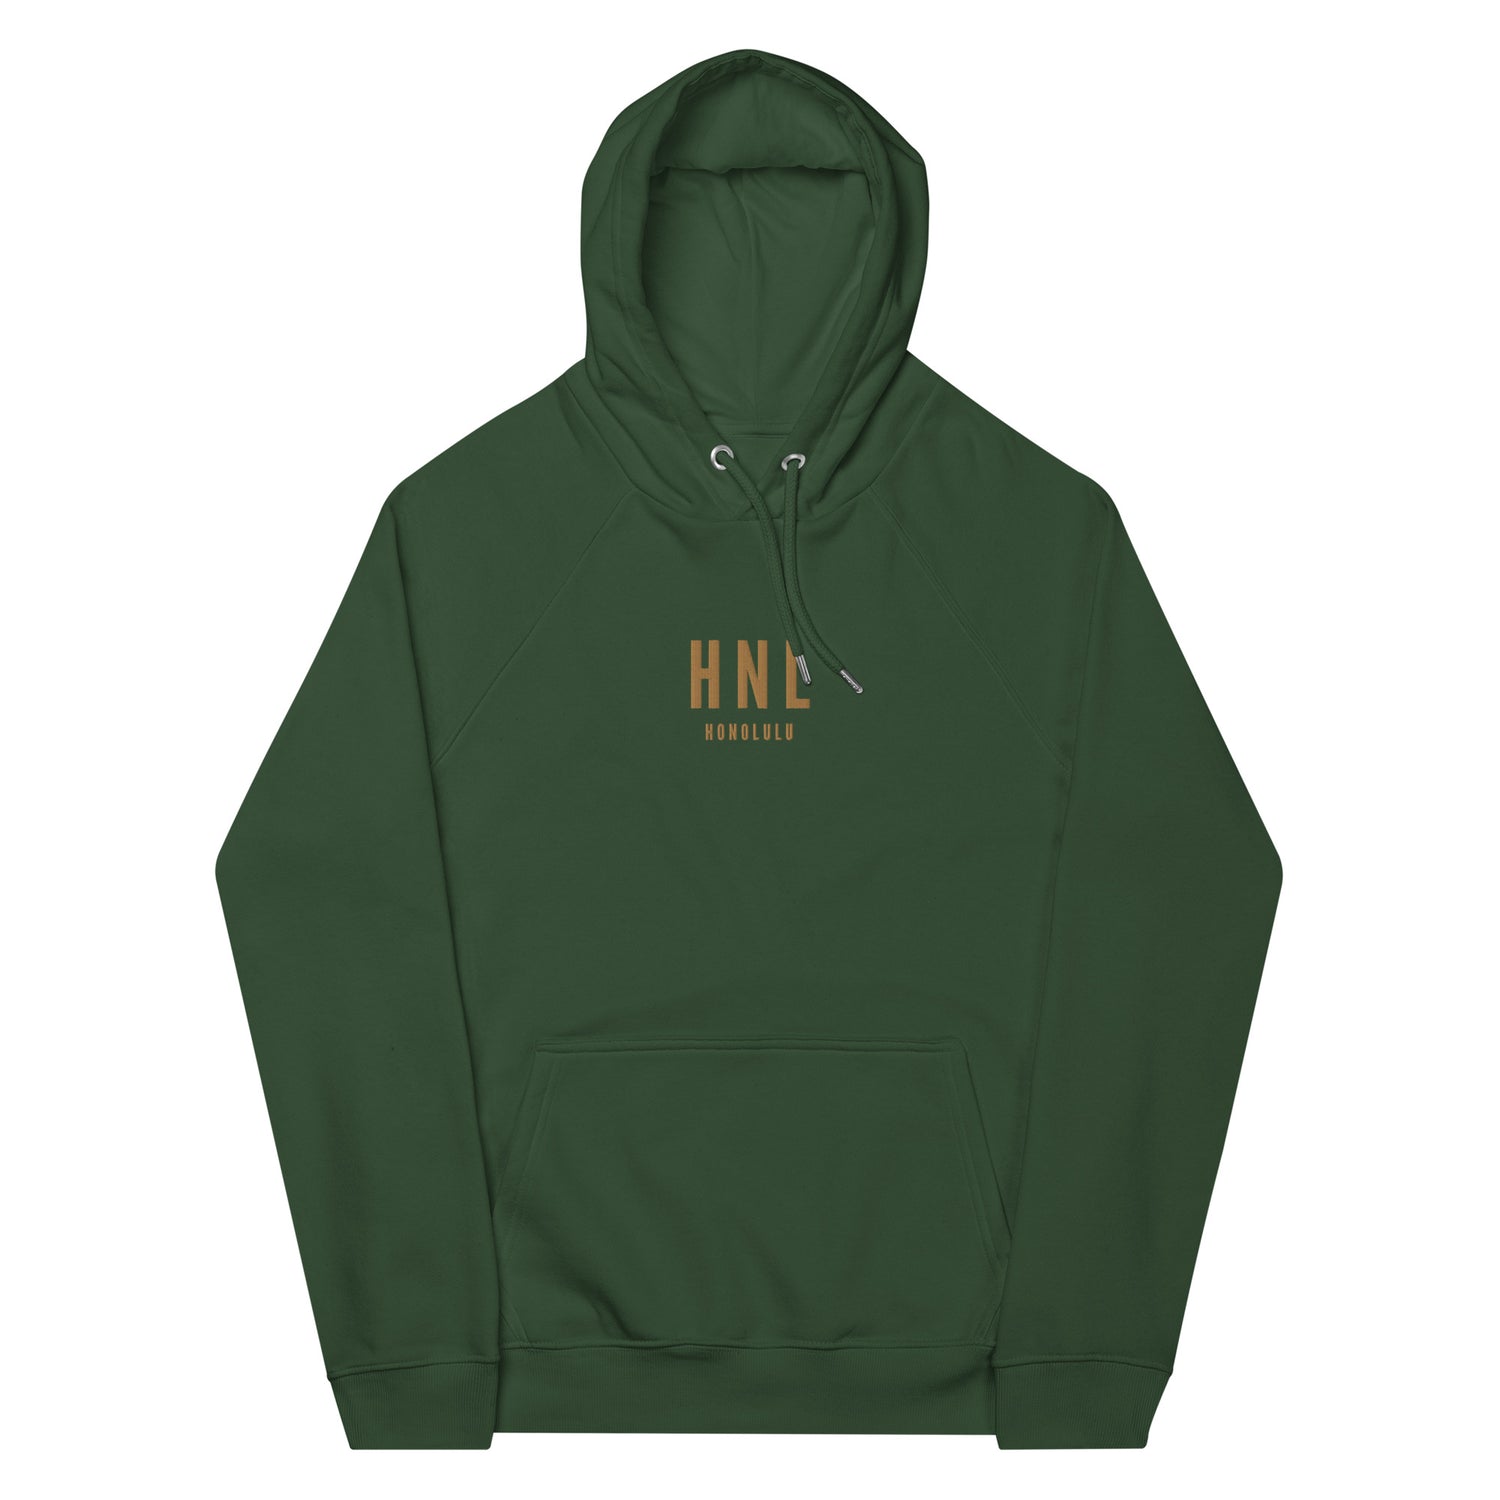 Honolulu Hawaii Hoodies and Sweatshirts • HNL Airport Code